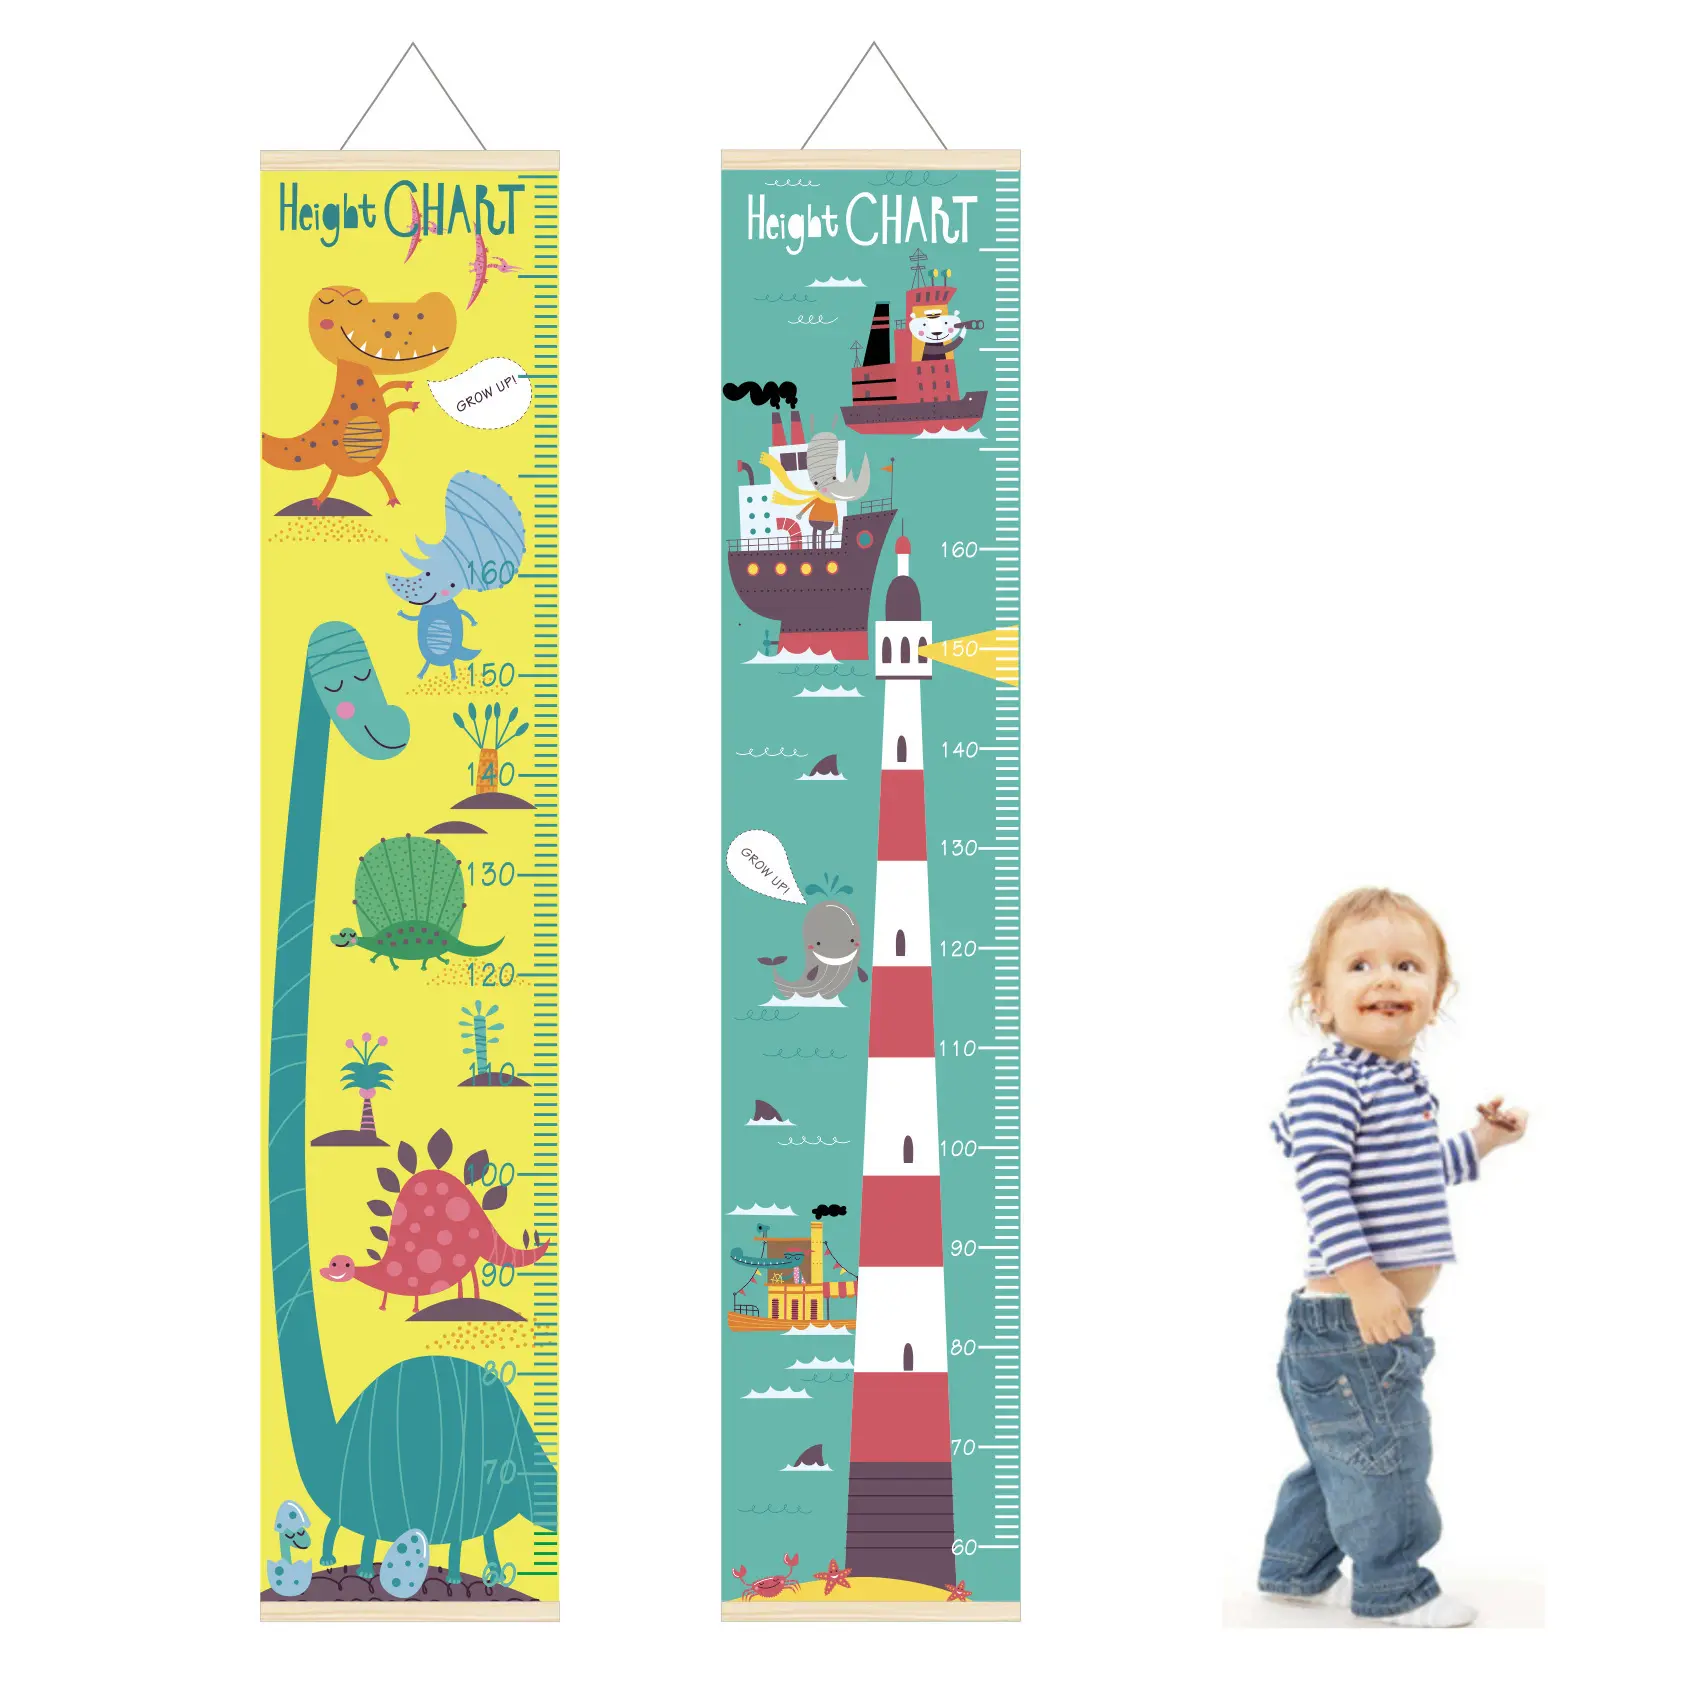 Tabla infantil decorativa para colgar en la pared, regla nórdica para medir la altura